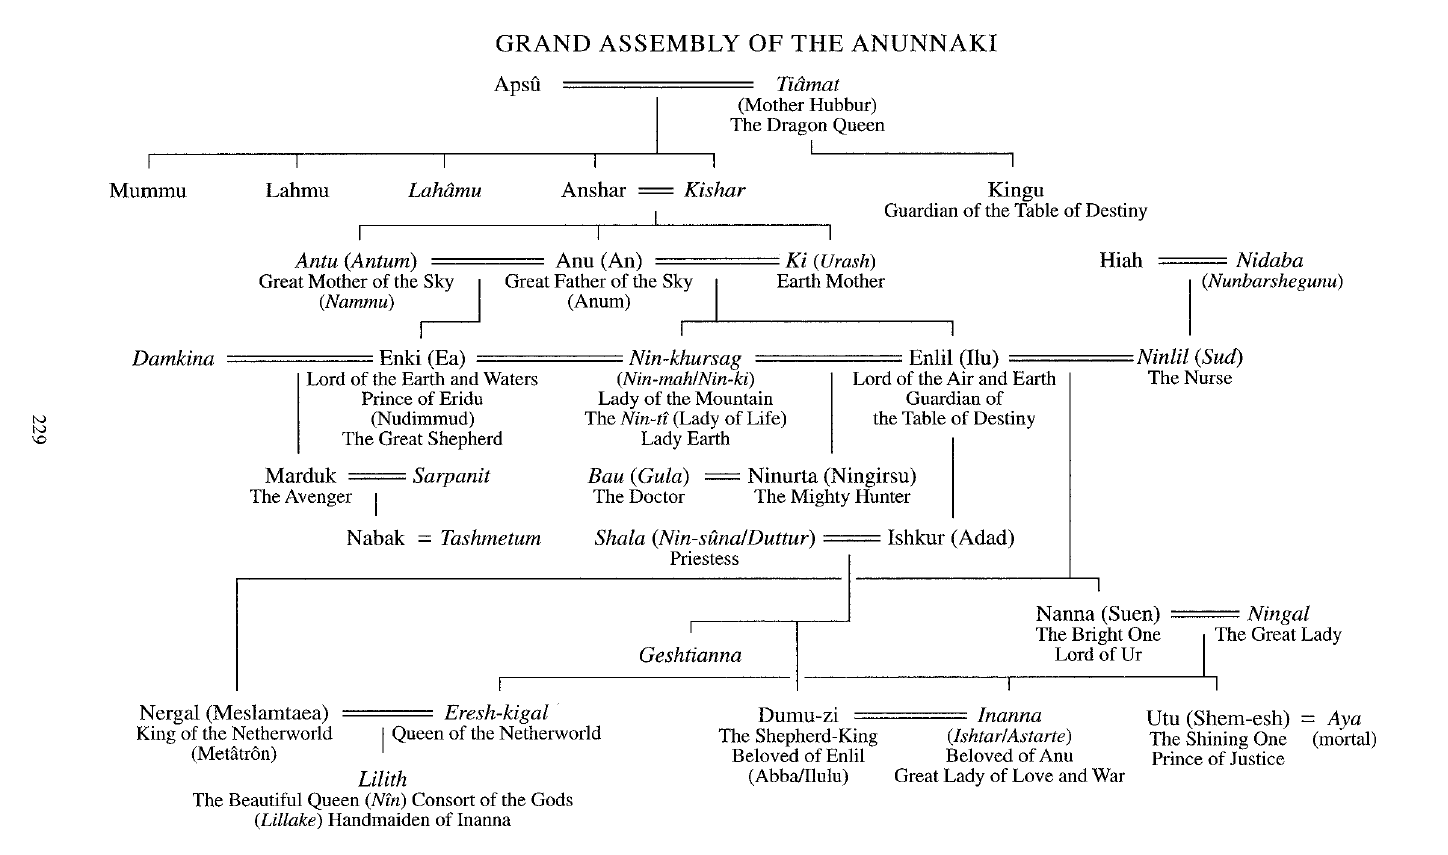 Royal Bloodline of the Anunnaki